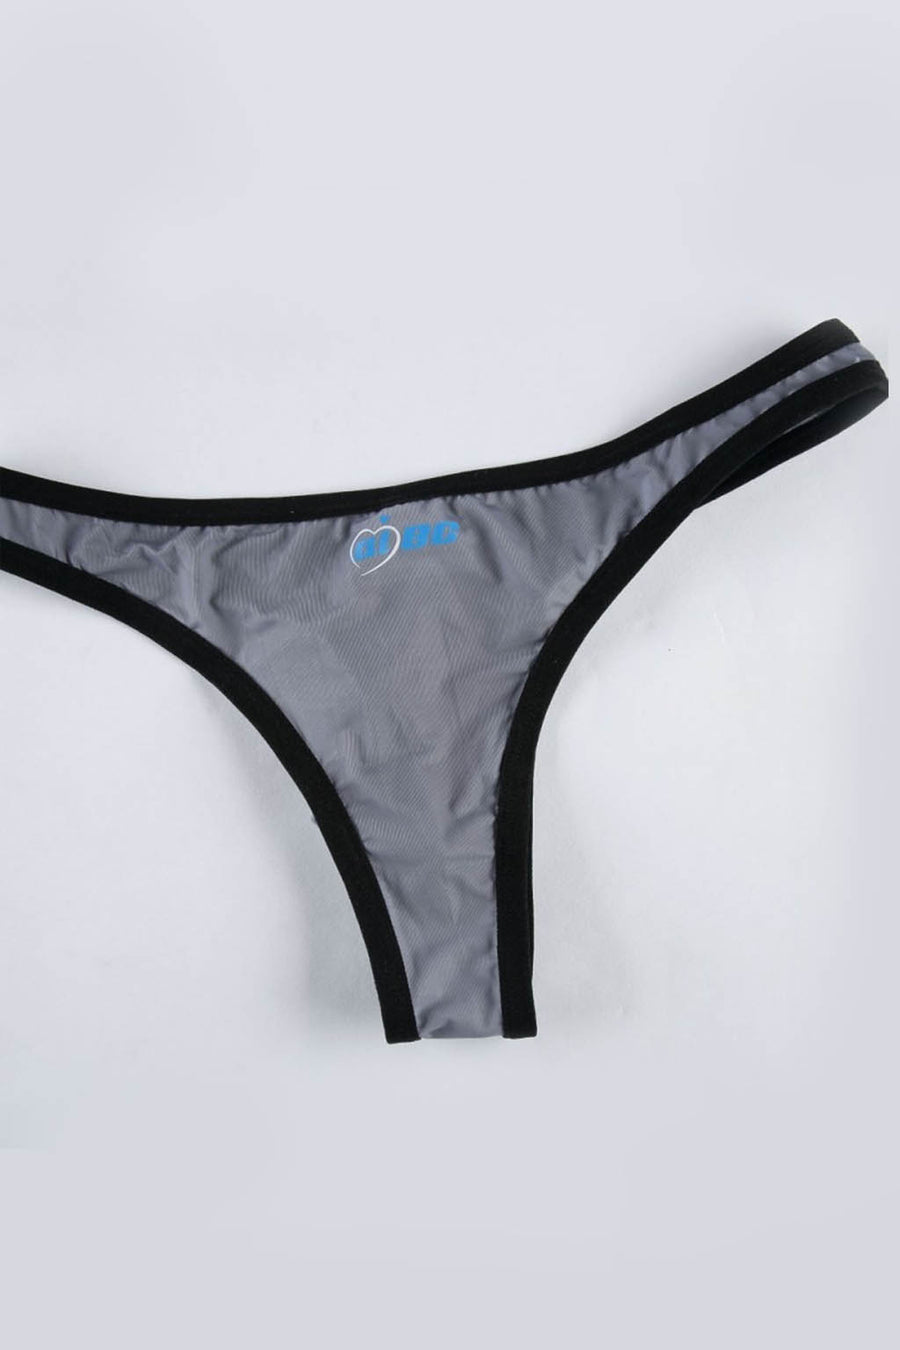 AIBC Mens Penis Sheath Brazilian Underwear